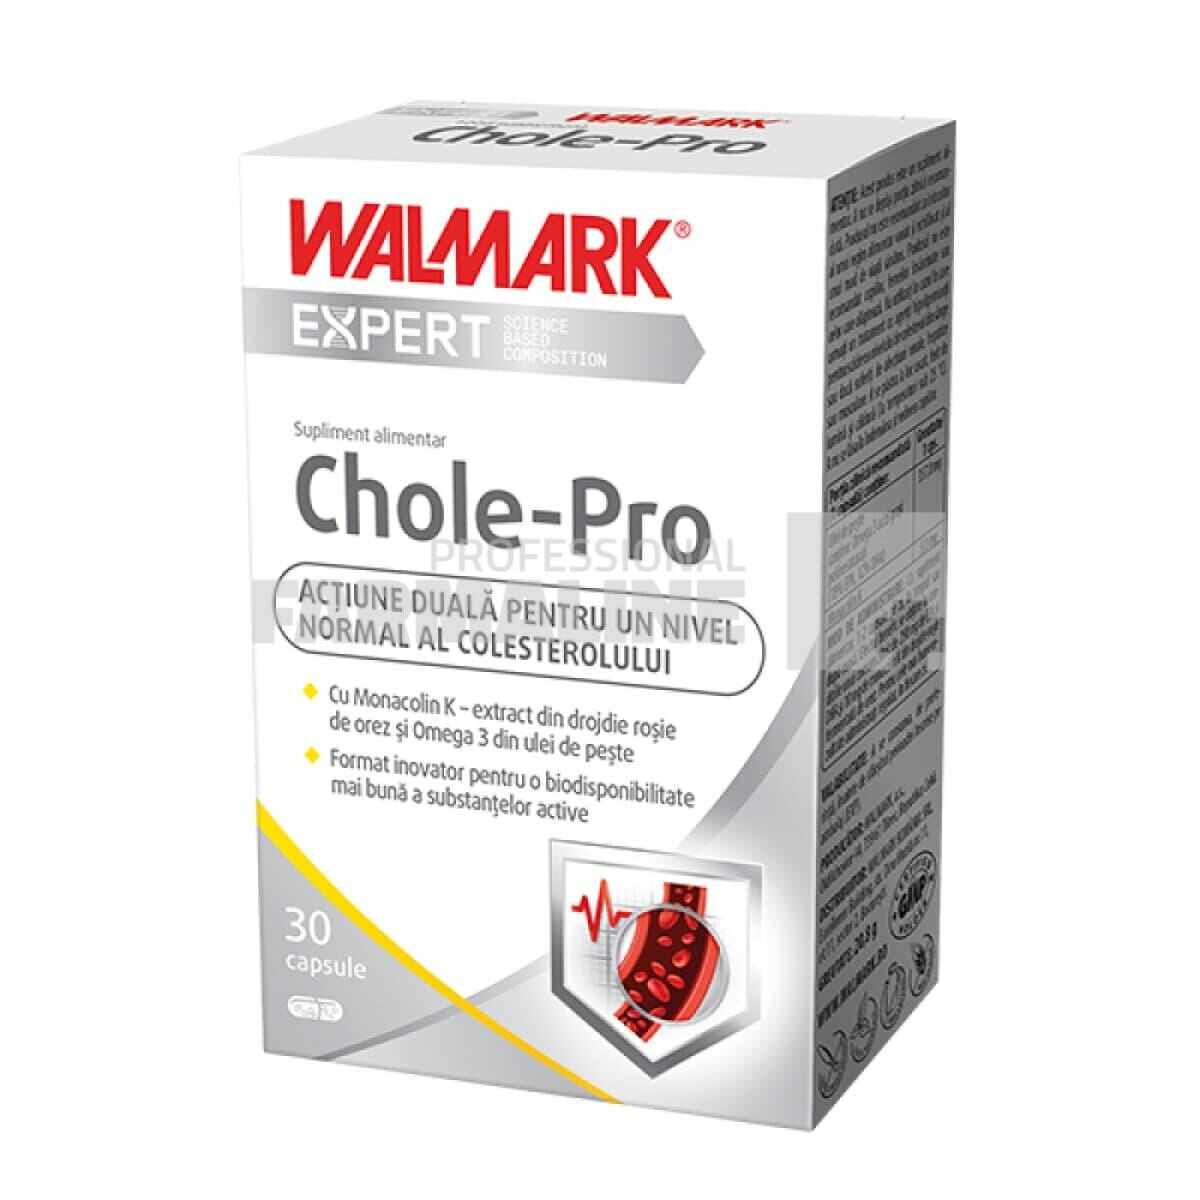 Walmark Chole - Pro 30 capsule